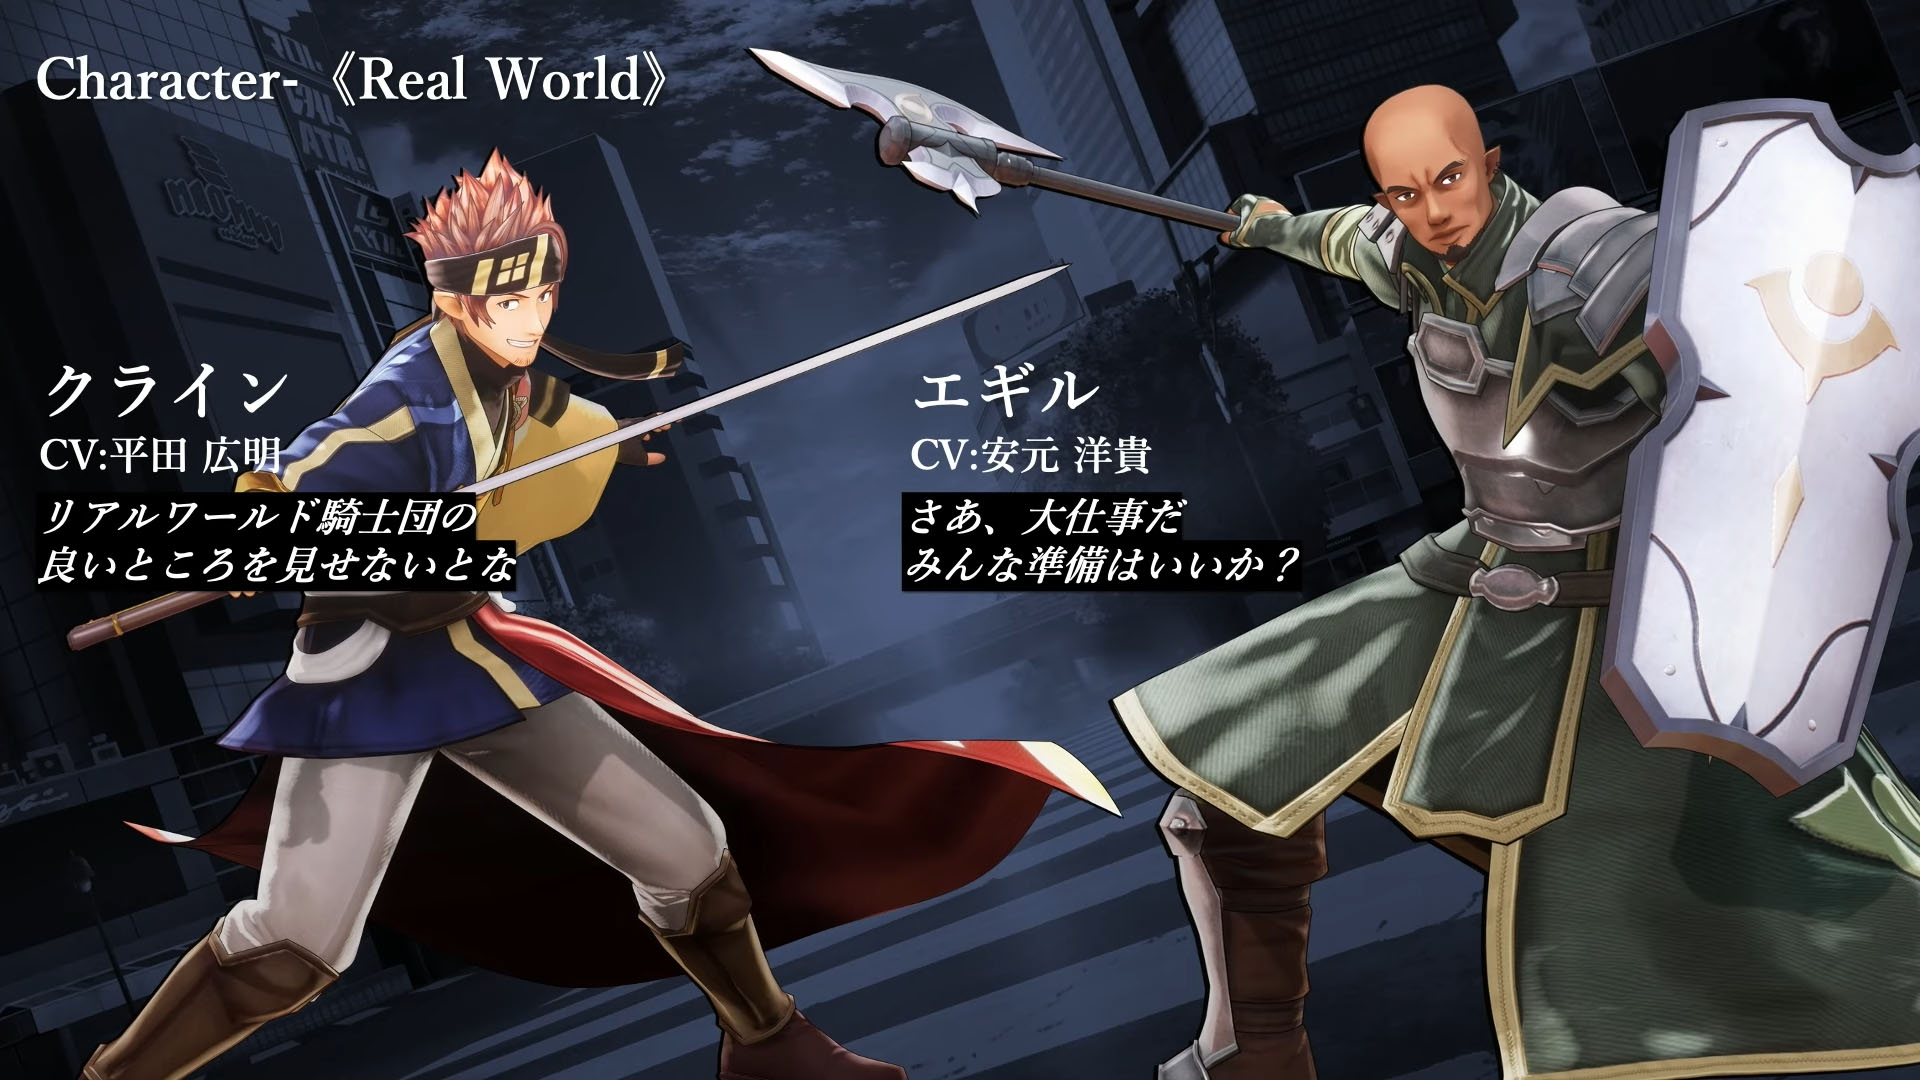 Sword Art Online: Last Recollection Announced - RPGamer